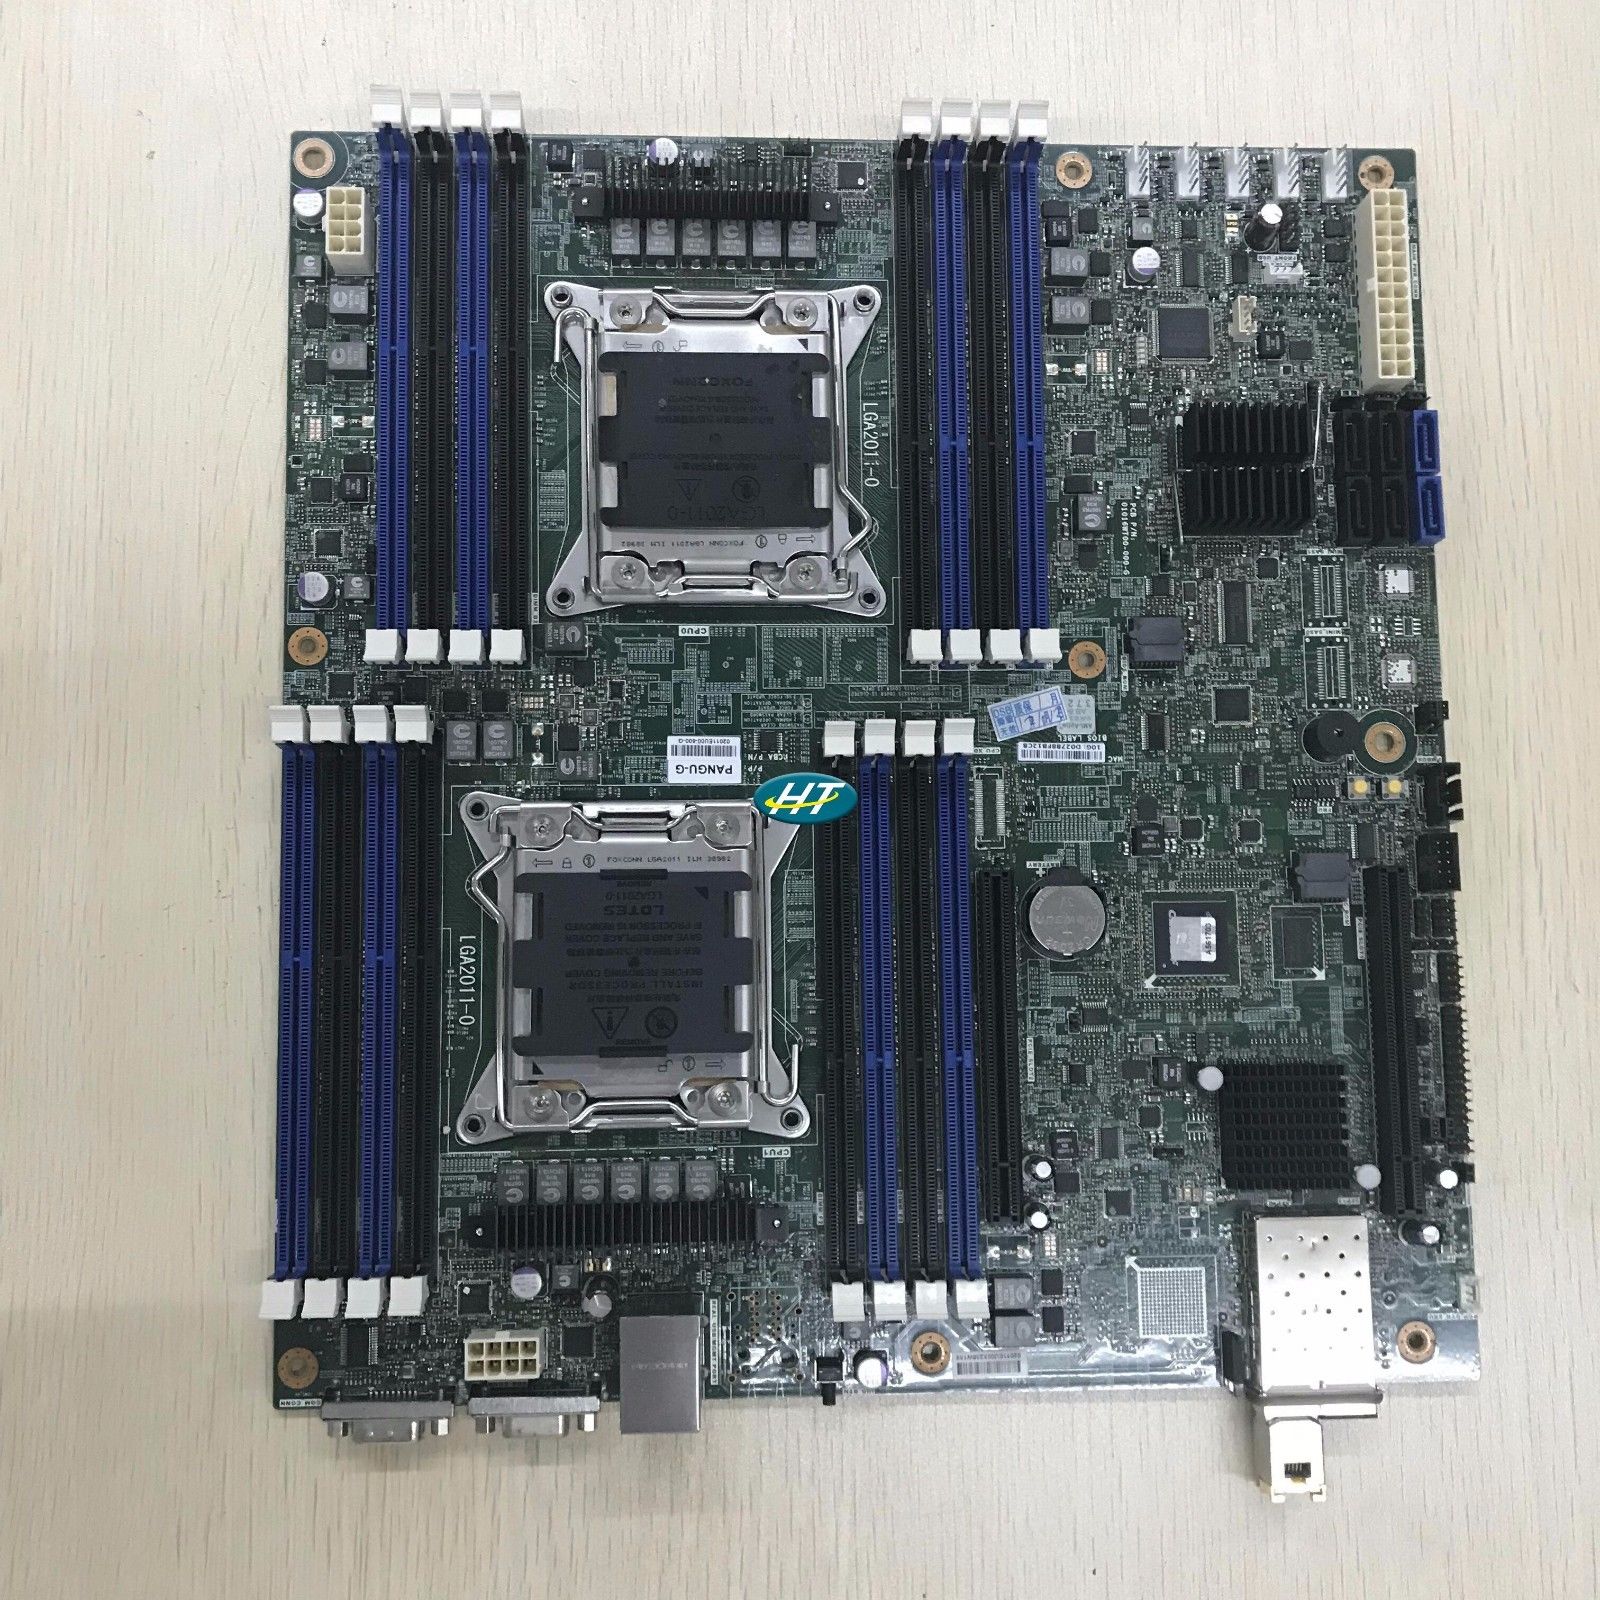 Foxconn C602 Server Motherboard X79 Dual Motherboard LGA2011 VGA And COM